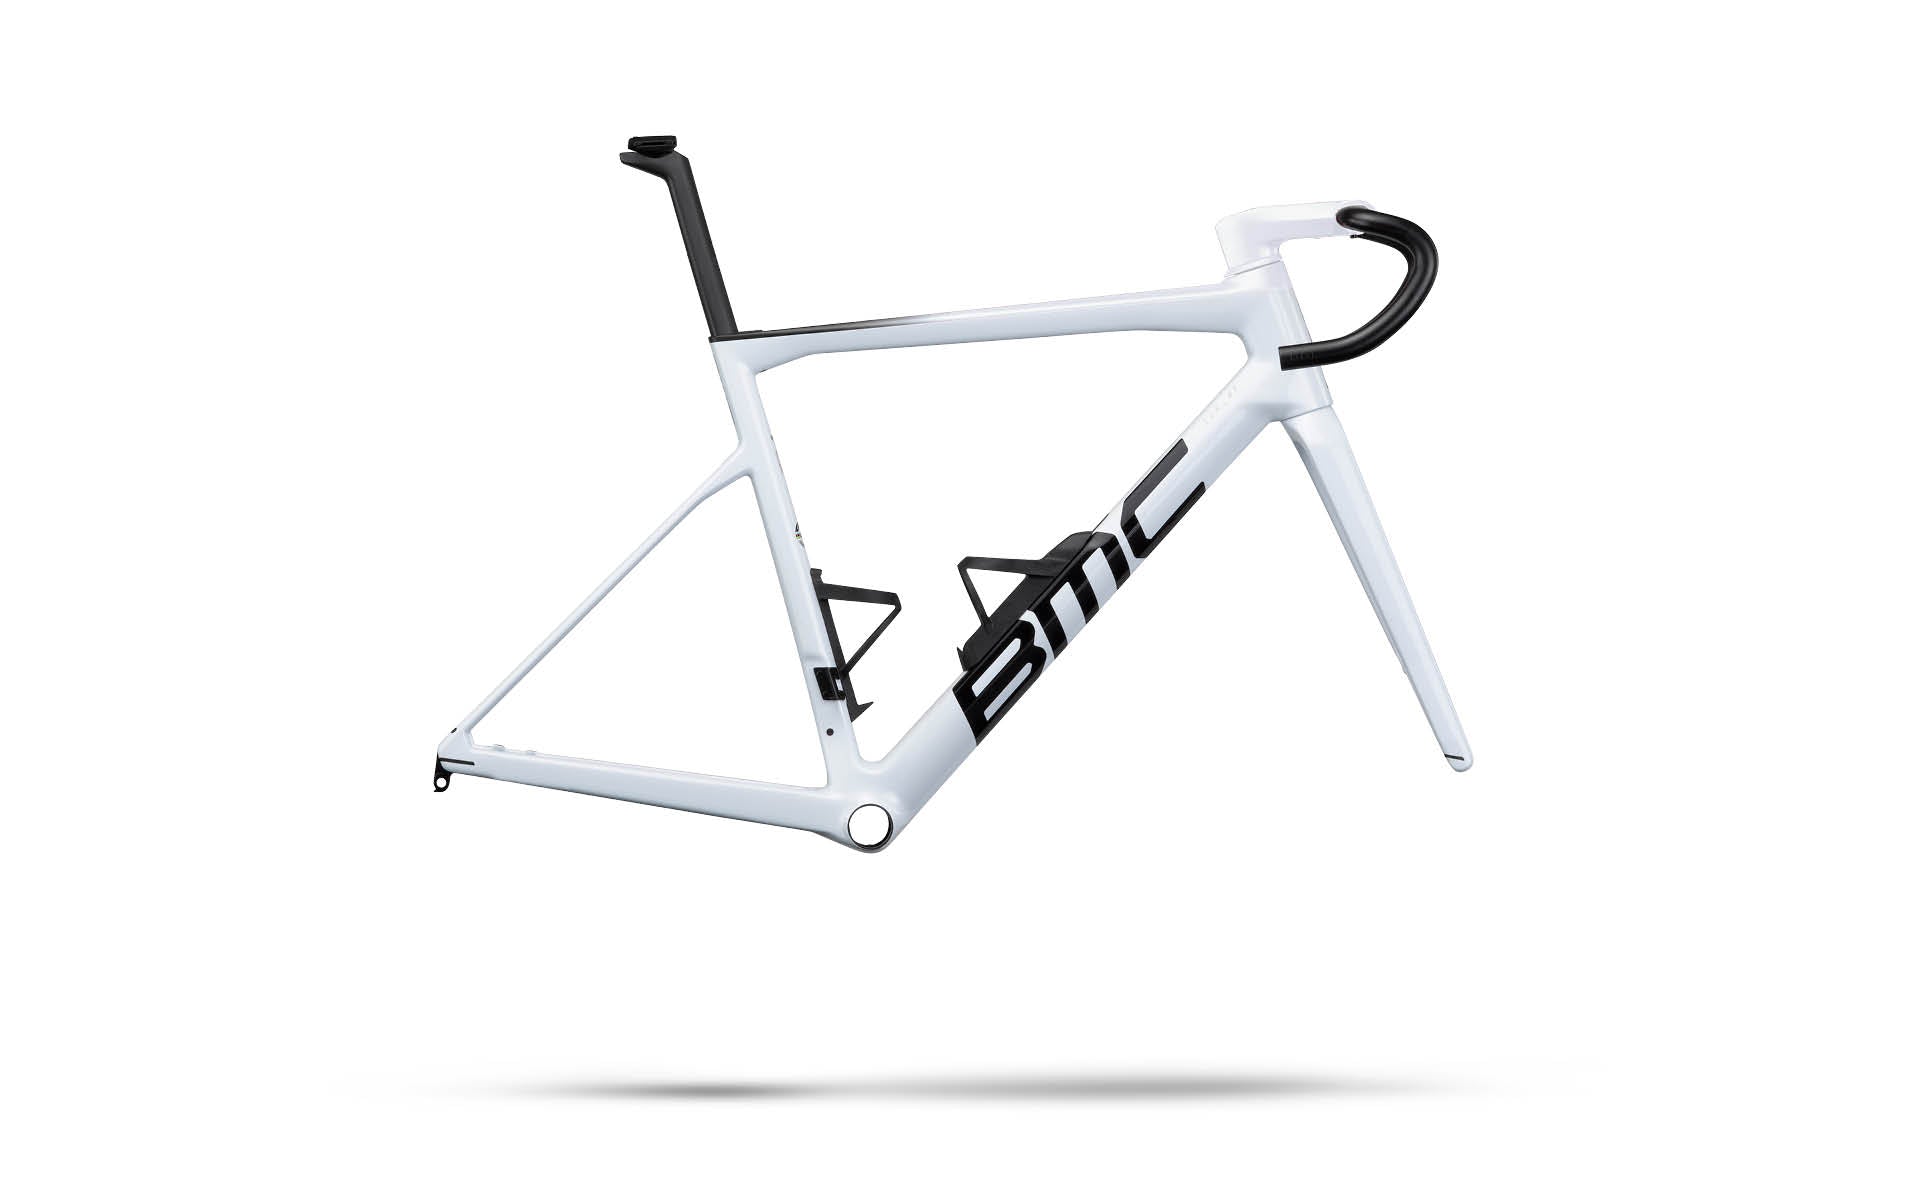 BMC Road Racing Bikes | Teammachine SLR 01